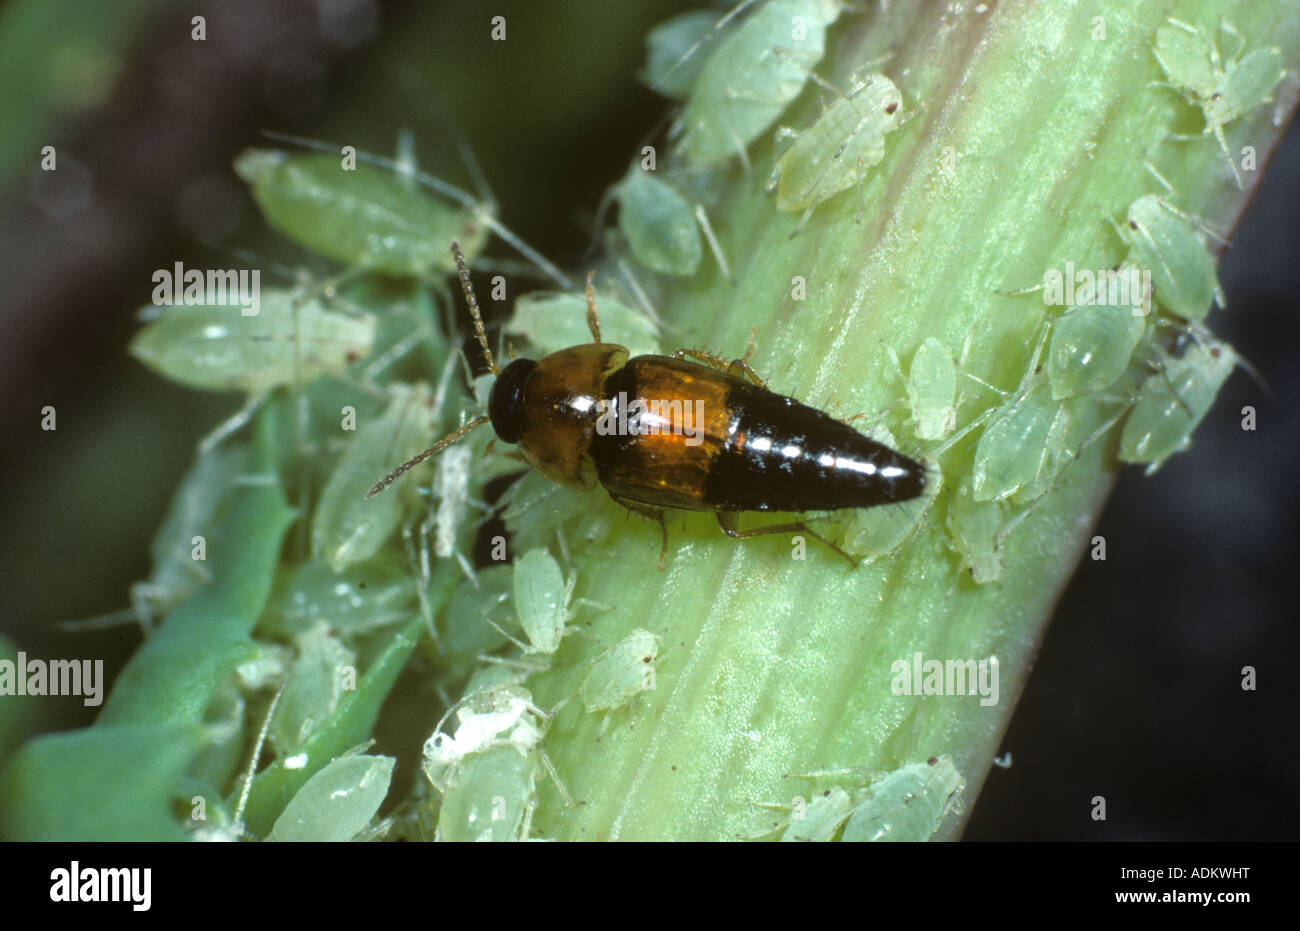 a-rove-beetle-tachyporus-hypnorum-feeding-on-aphids-ADKWHT.jpg